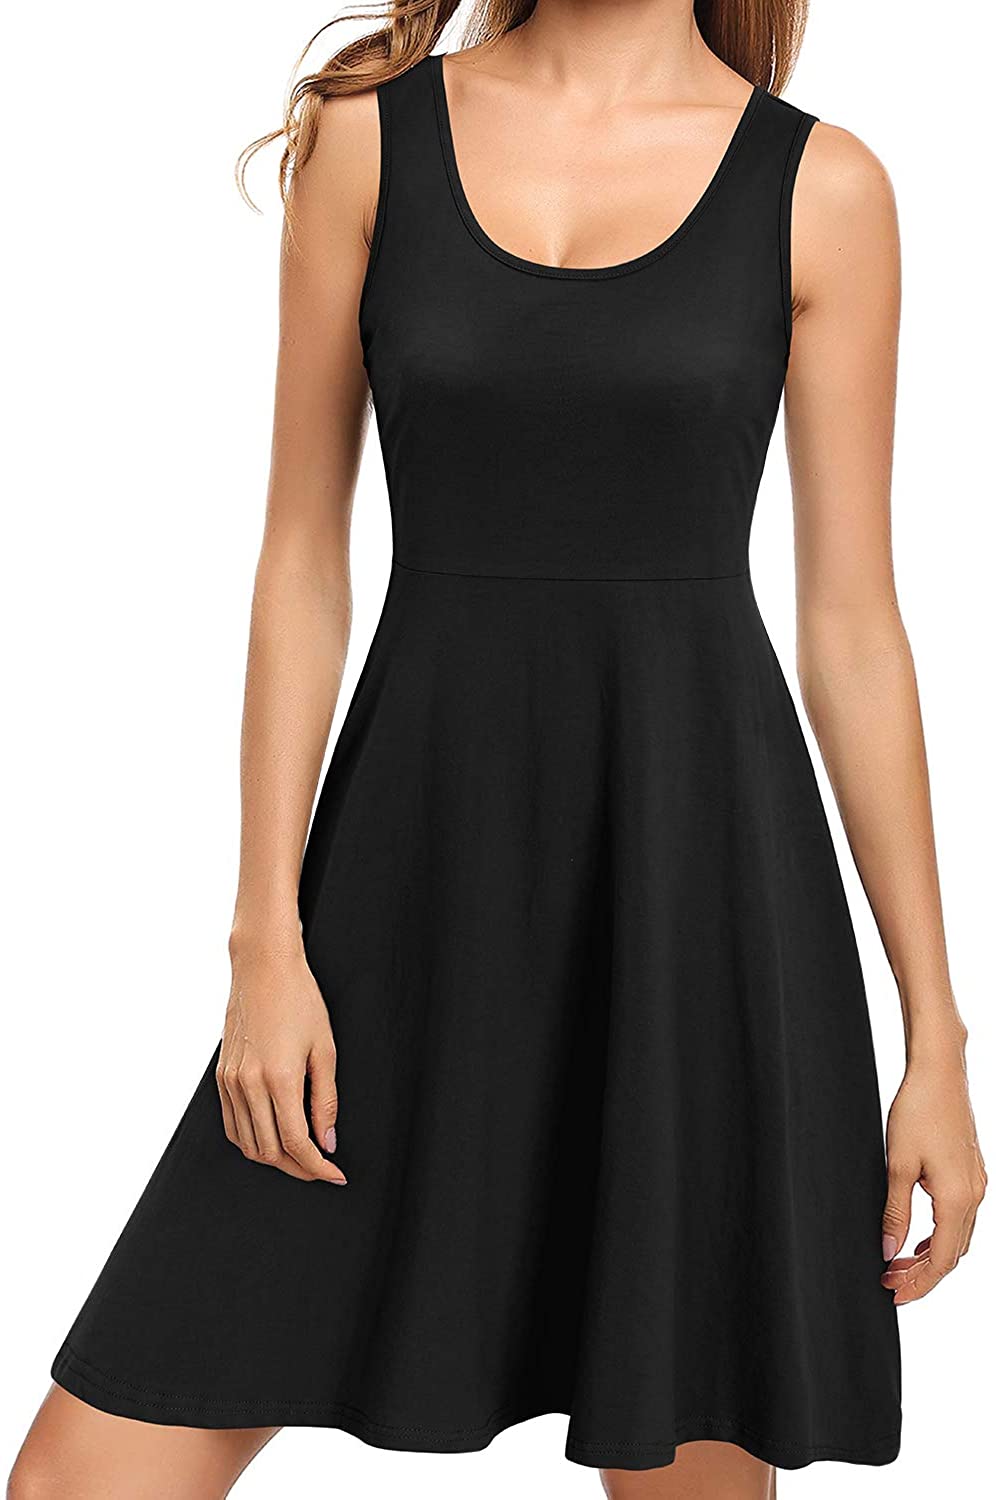 STYLEWORD Women's Sleeveless Casual Cotton Flare Dress(Navy,S), Black ...